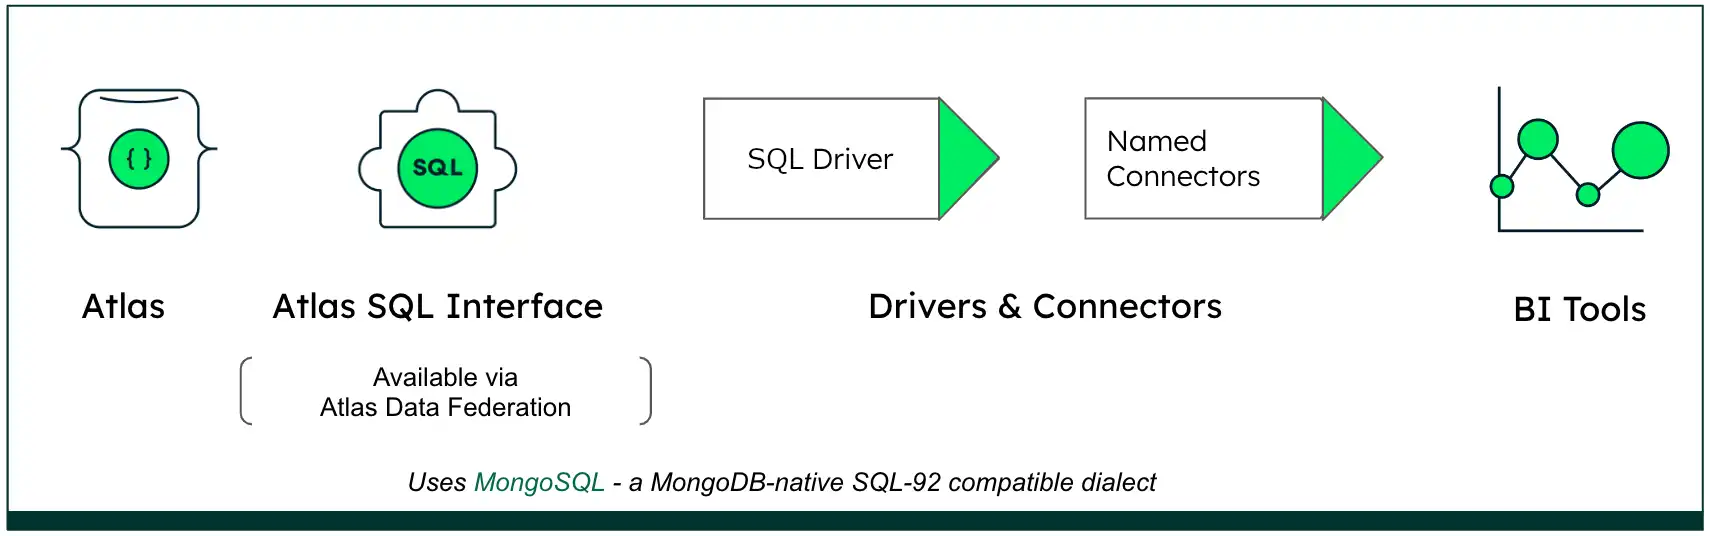 MongoDB Atlas SQLquery flow diagram